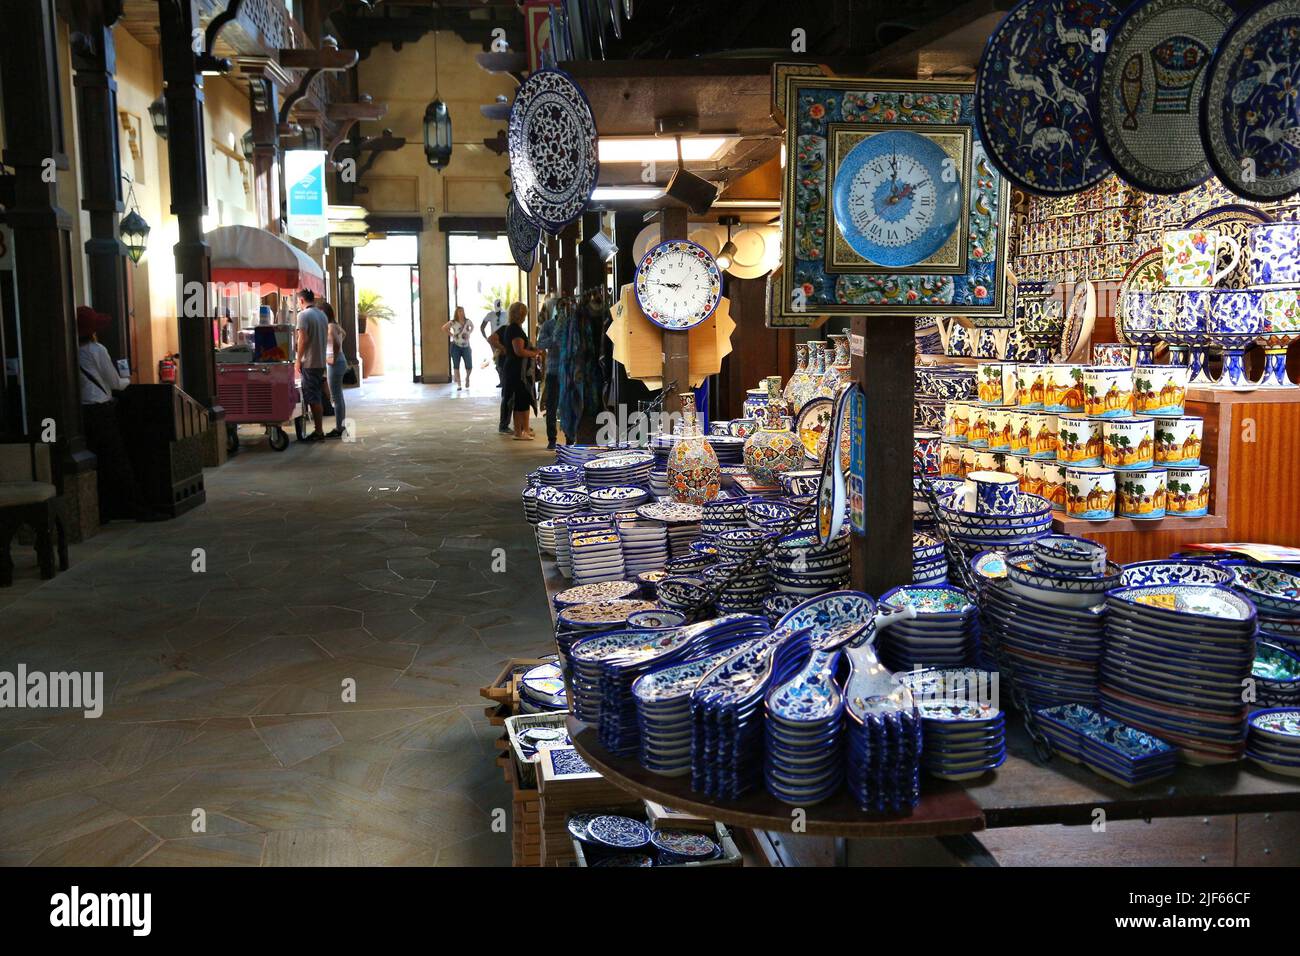 DUBAI, UAE - NOVEMBER 23, 2017: Tourists visit handicraft shops at Souk Madinat Jumeirah in Dubai. The traditional Arab style bazaar is part of Madina Stock Photo